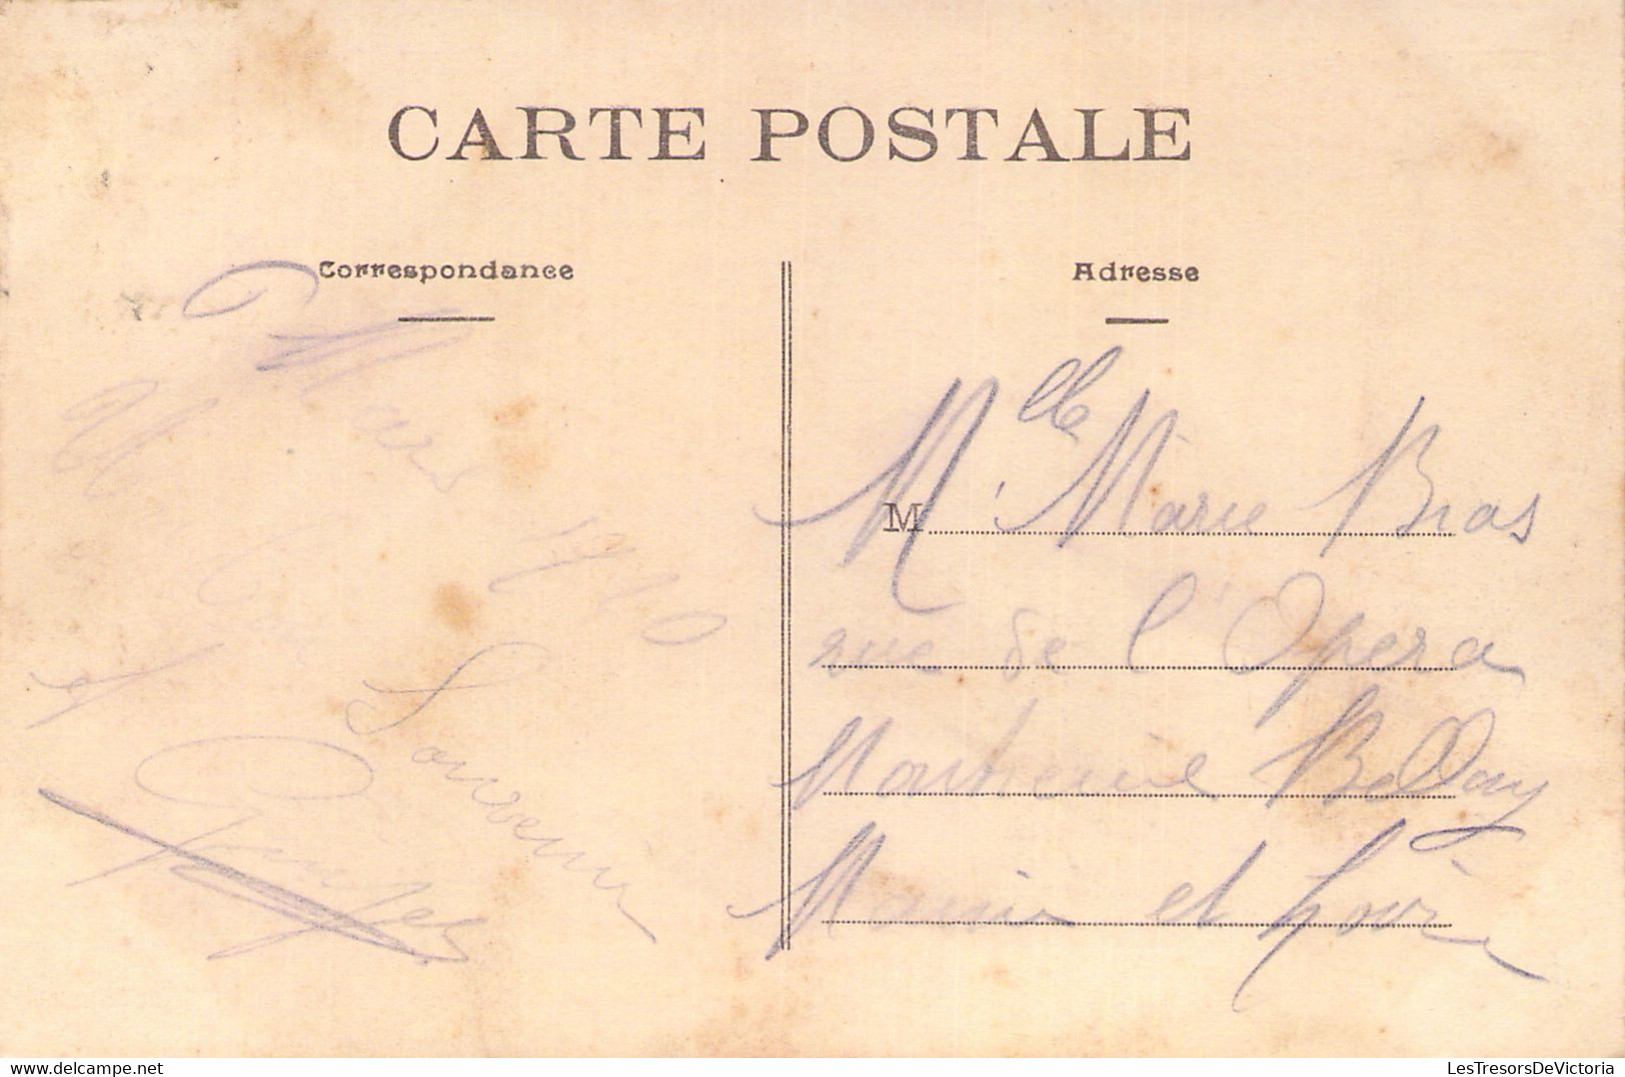 TRANSPORT - AVION - Biplan Voisin à Niort - Carte Postale Ancienne - ....-1914: Vorläufer